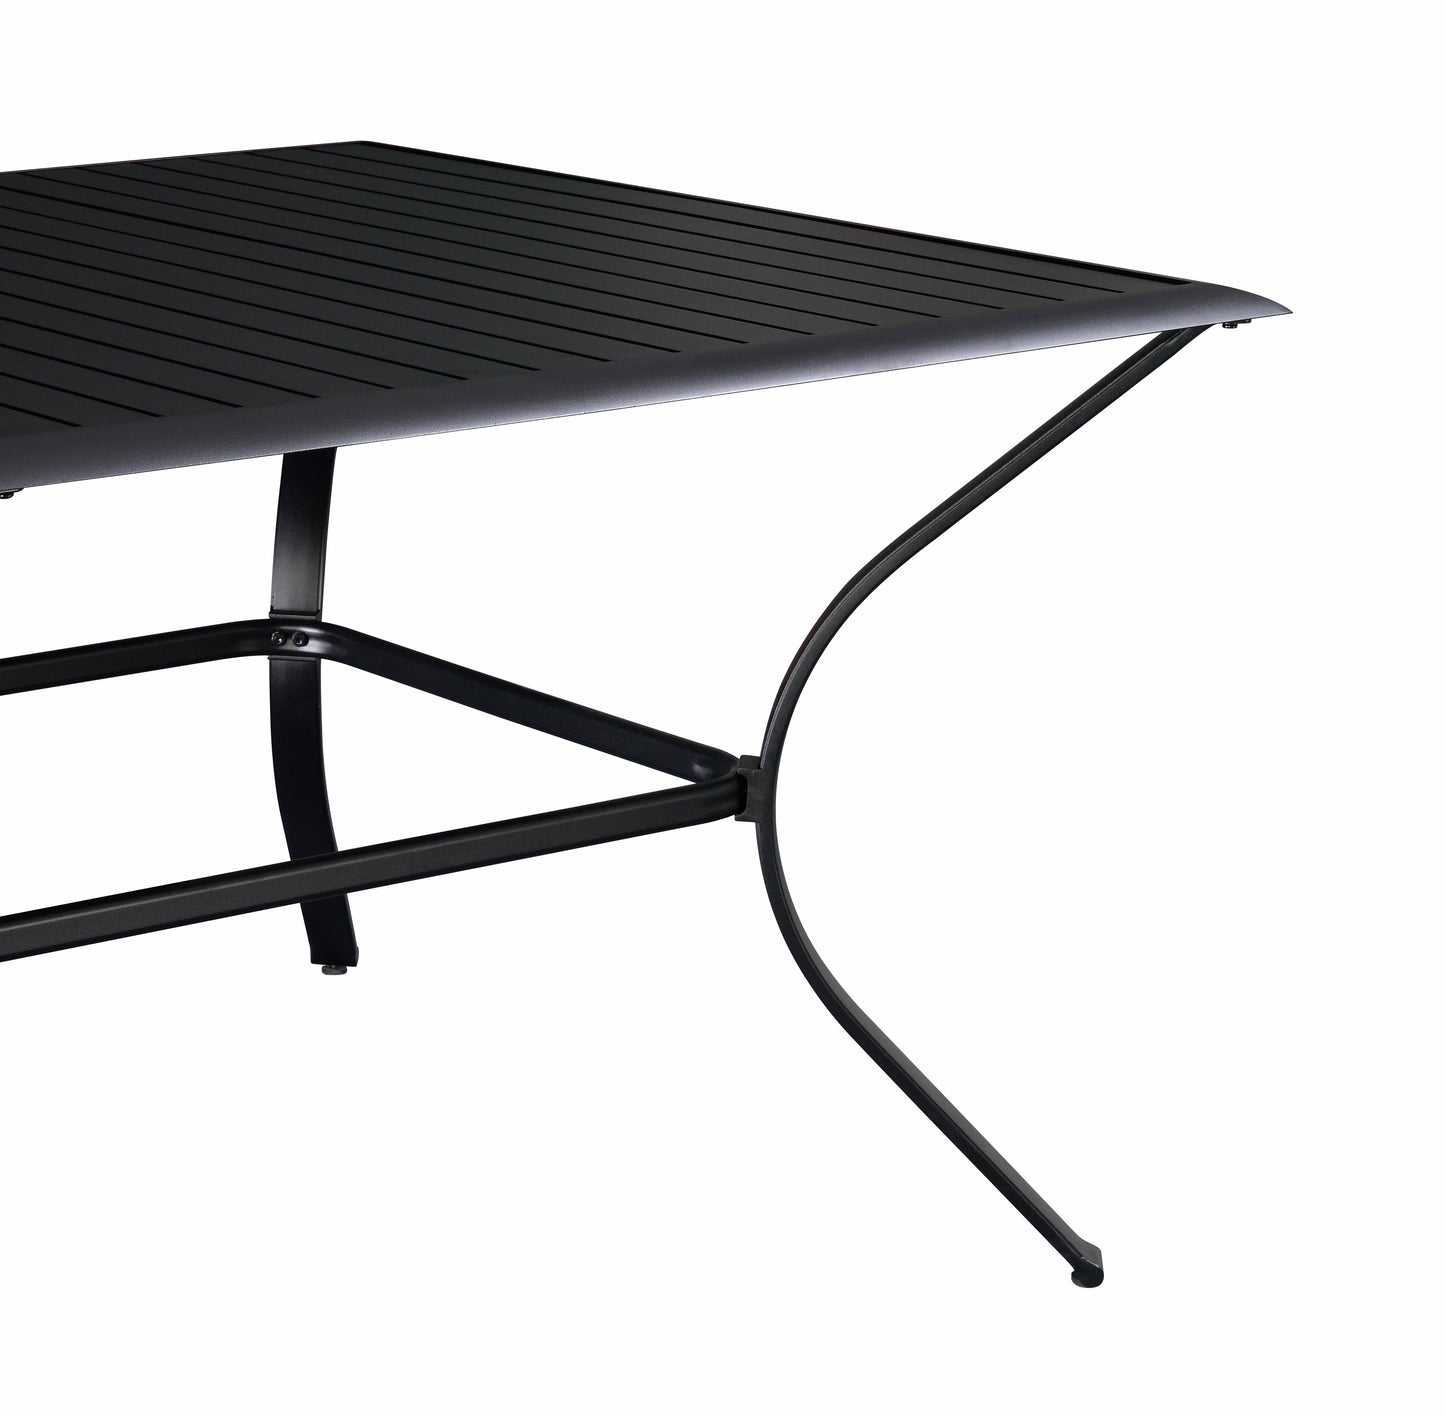 Aluminum Slat Top Table - Black